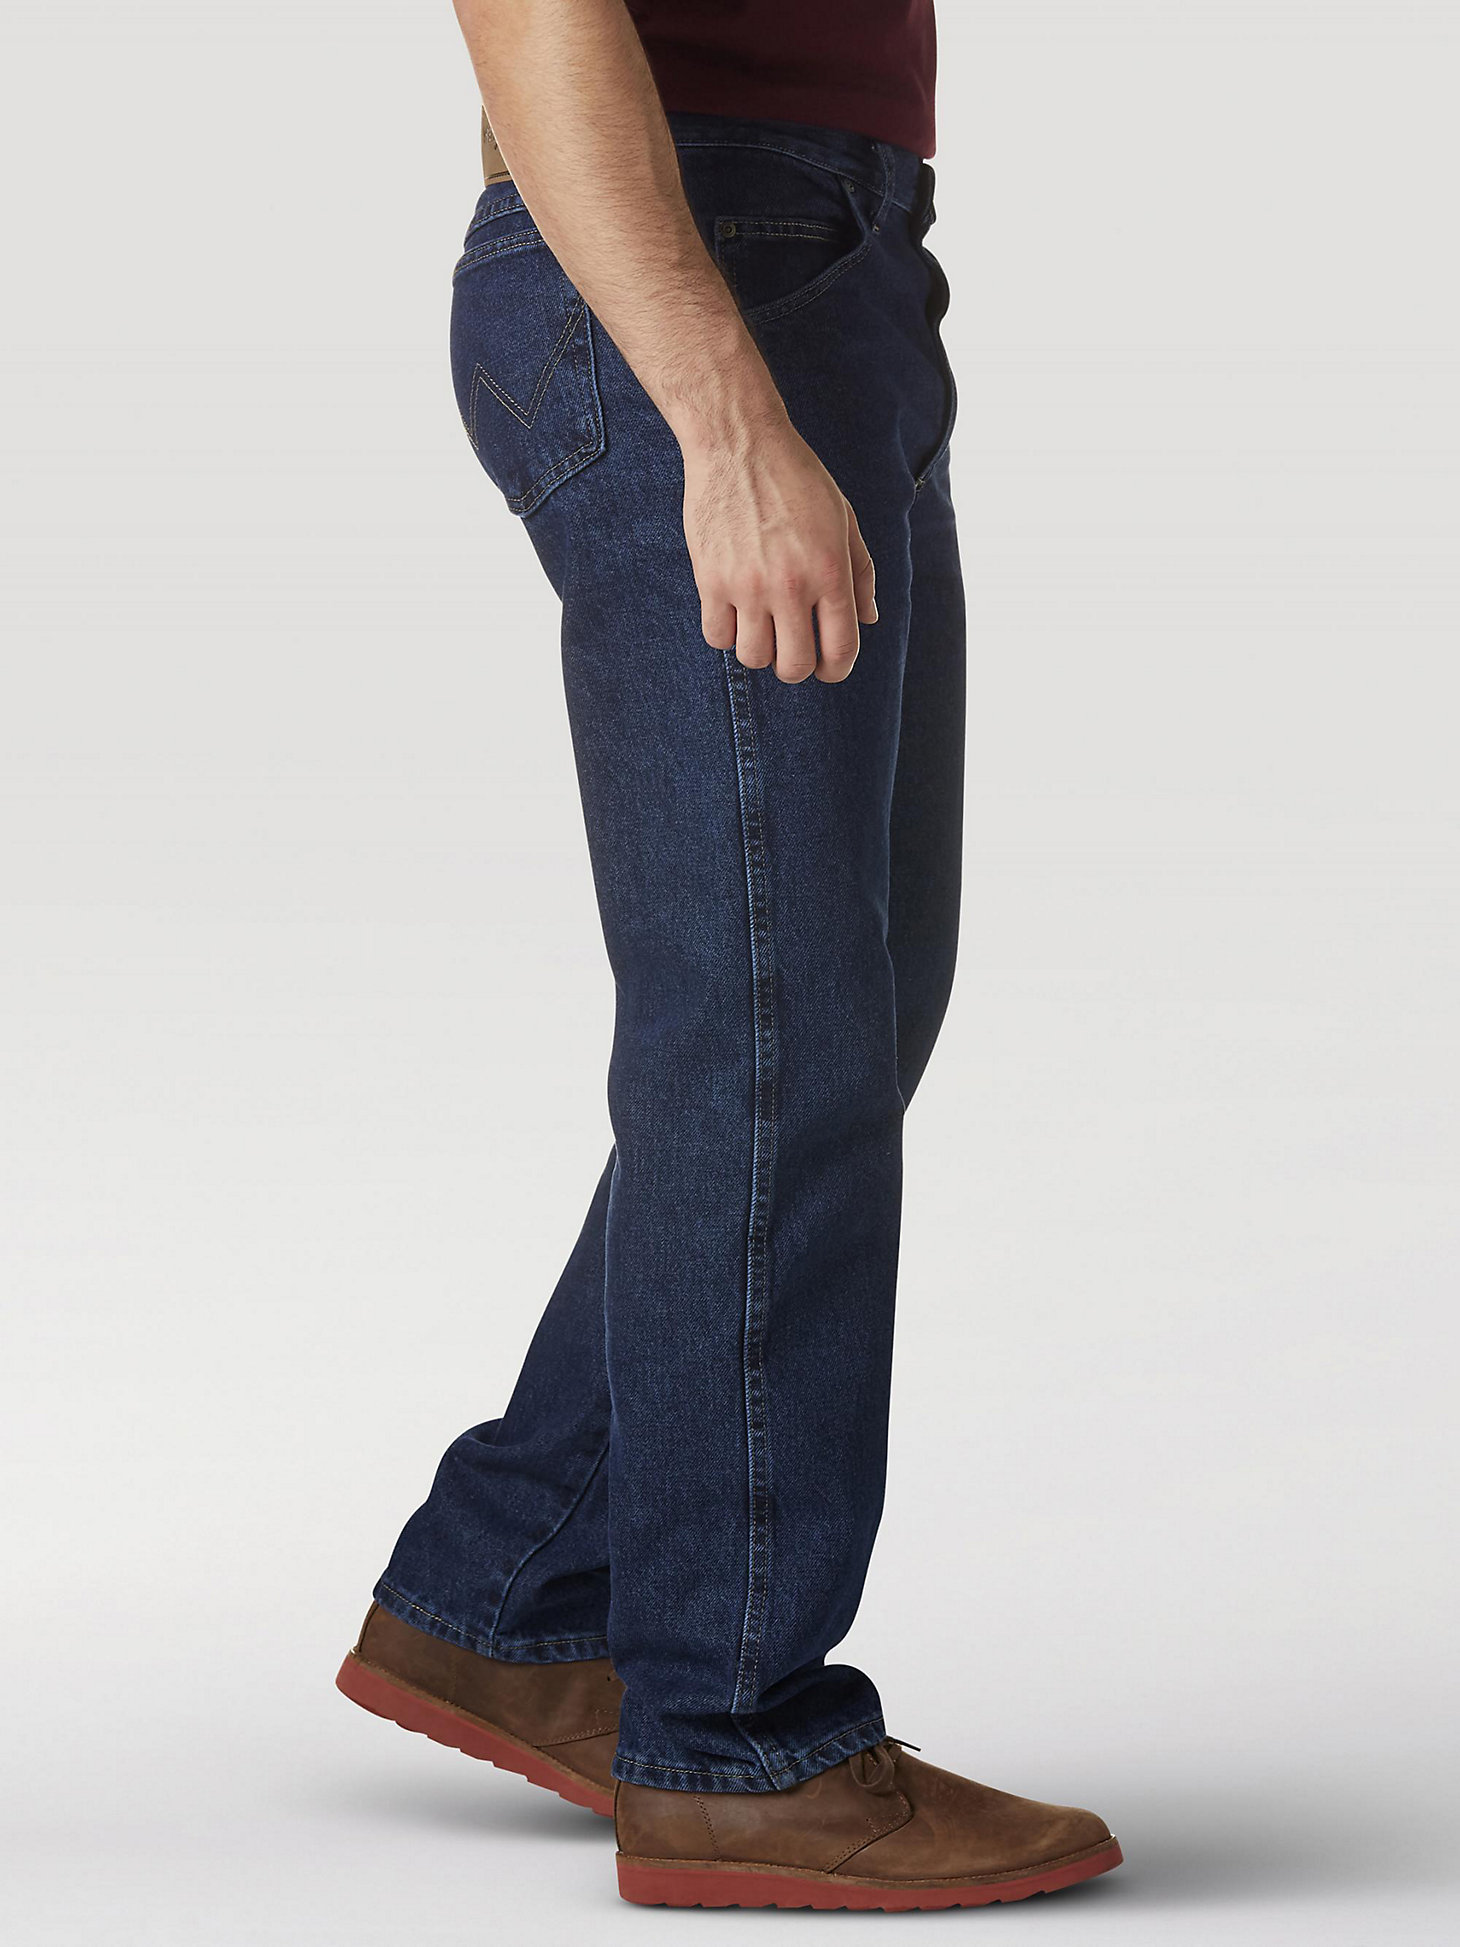 Wrangler Rugged Wear® Classic Fit Jean